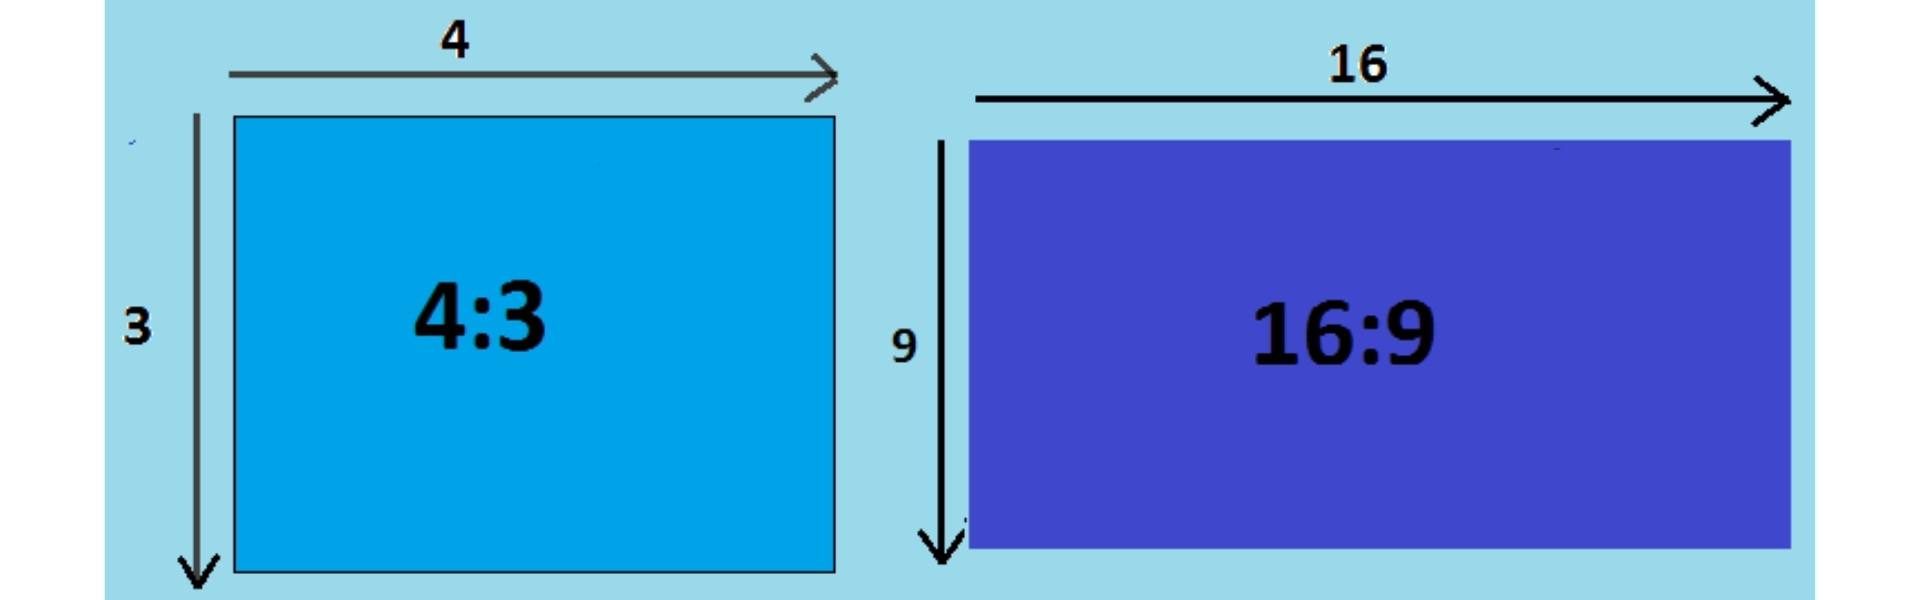 Aspect ratios of various sizes: 4: 3, 16: 9.